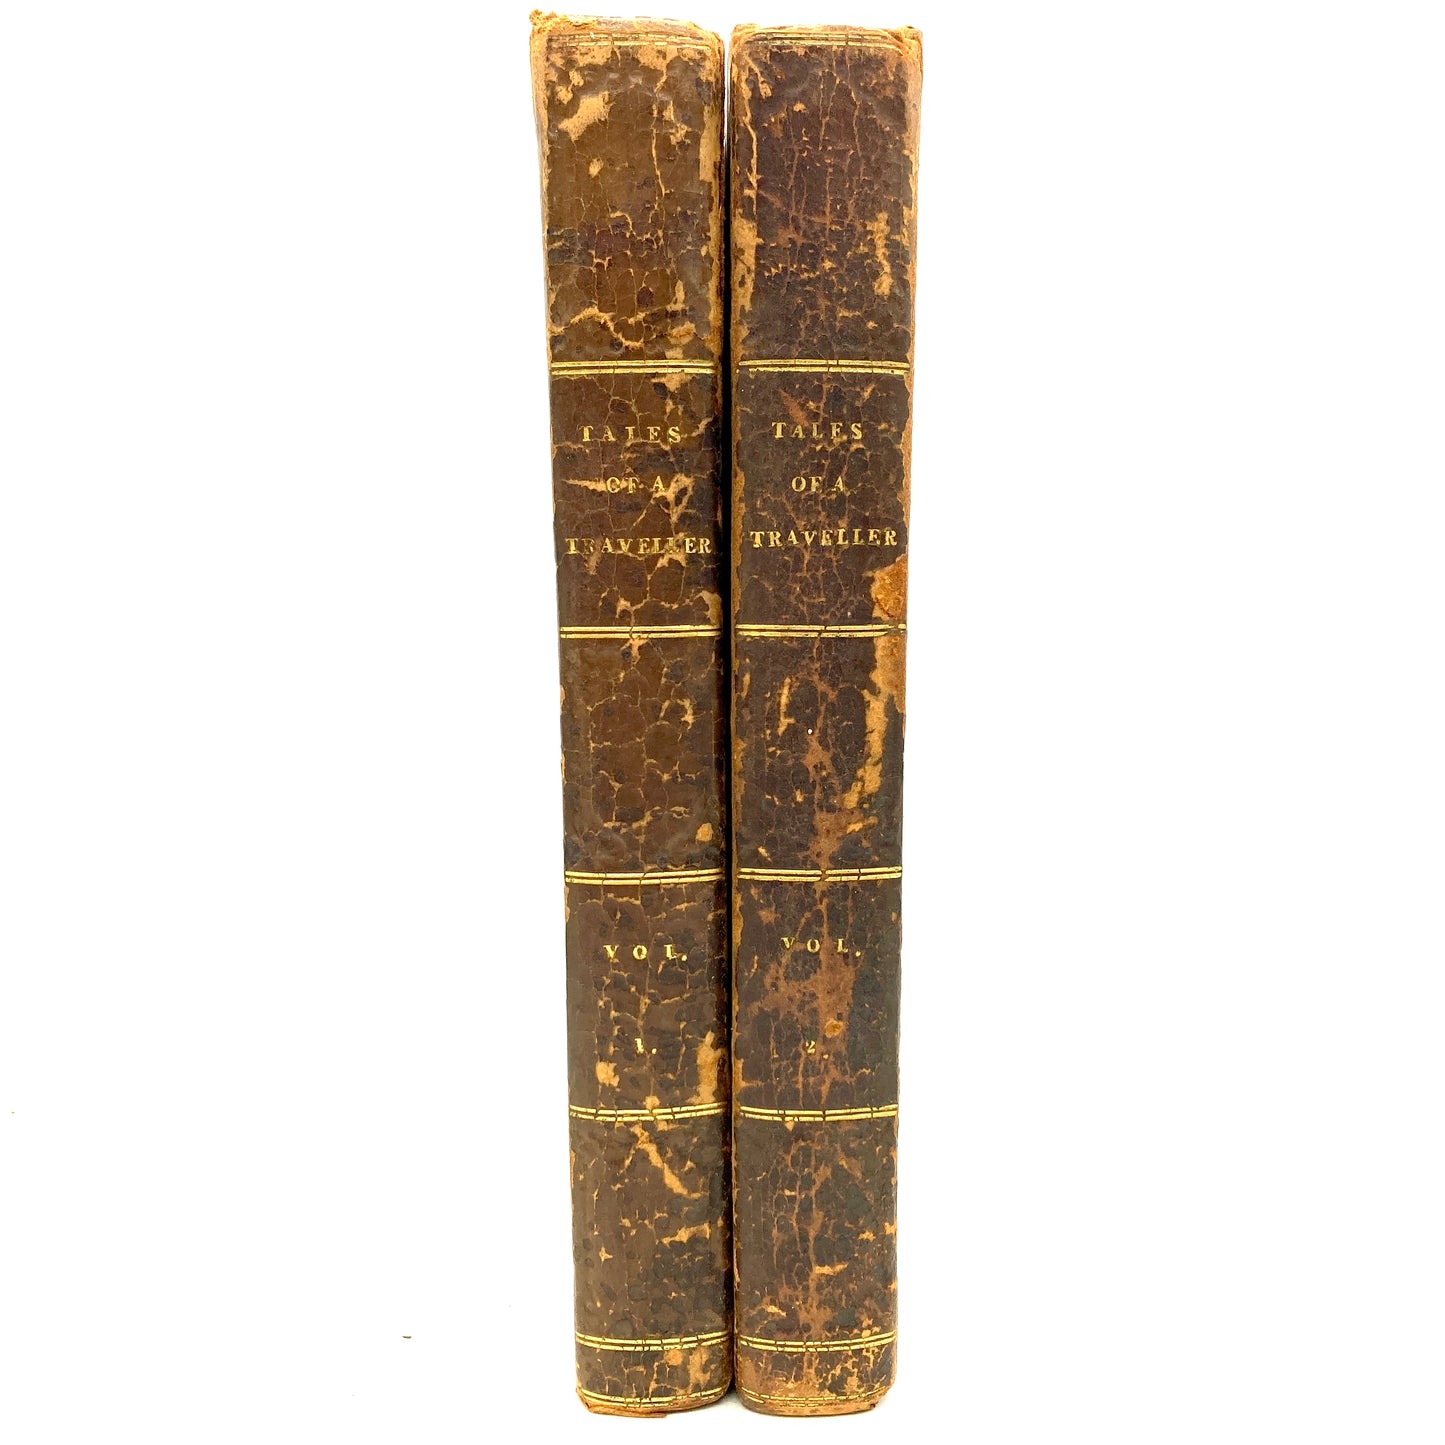 IRVING, Washington "Tales of a Traveler" [John Murray, 1824] 1st Edition